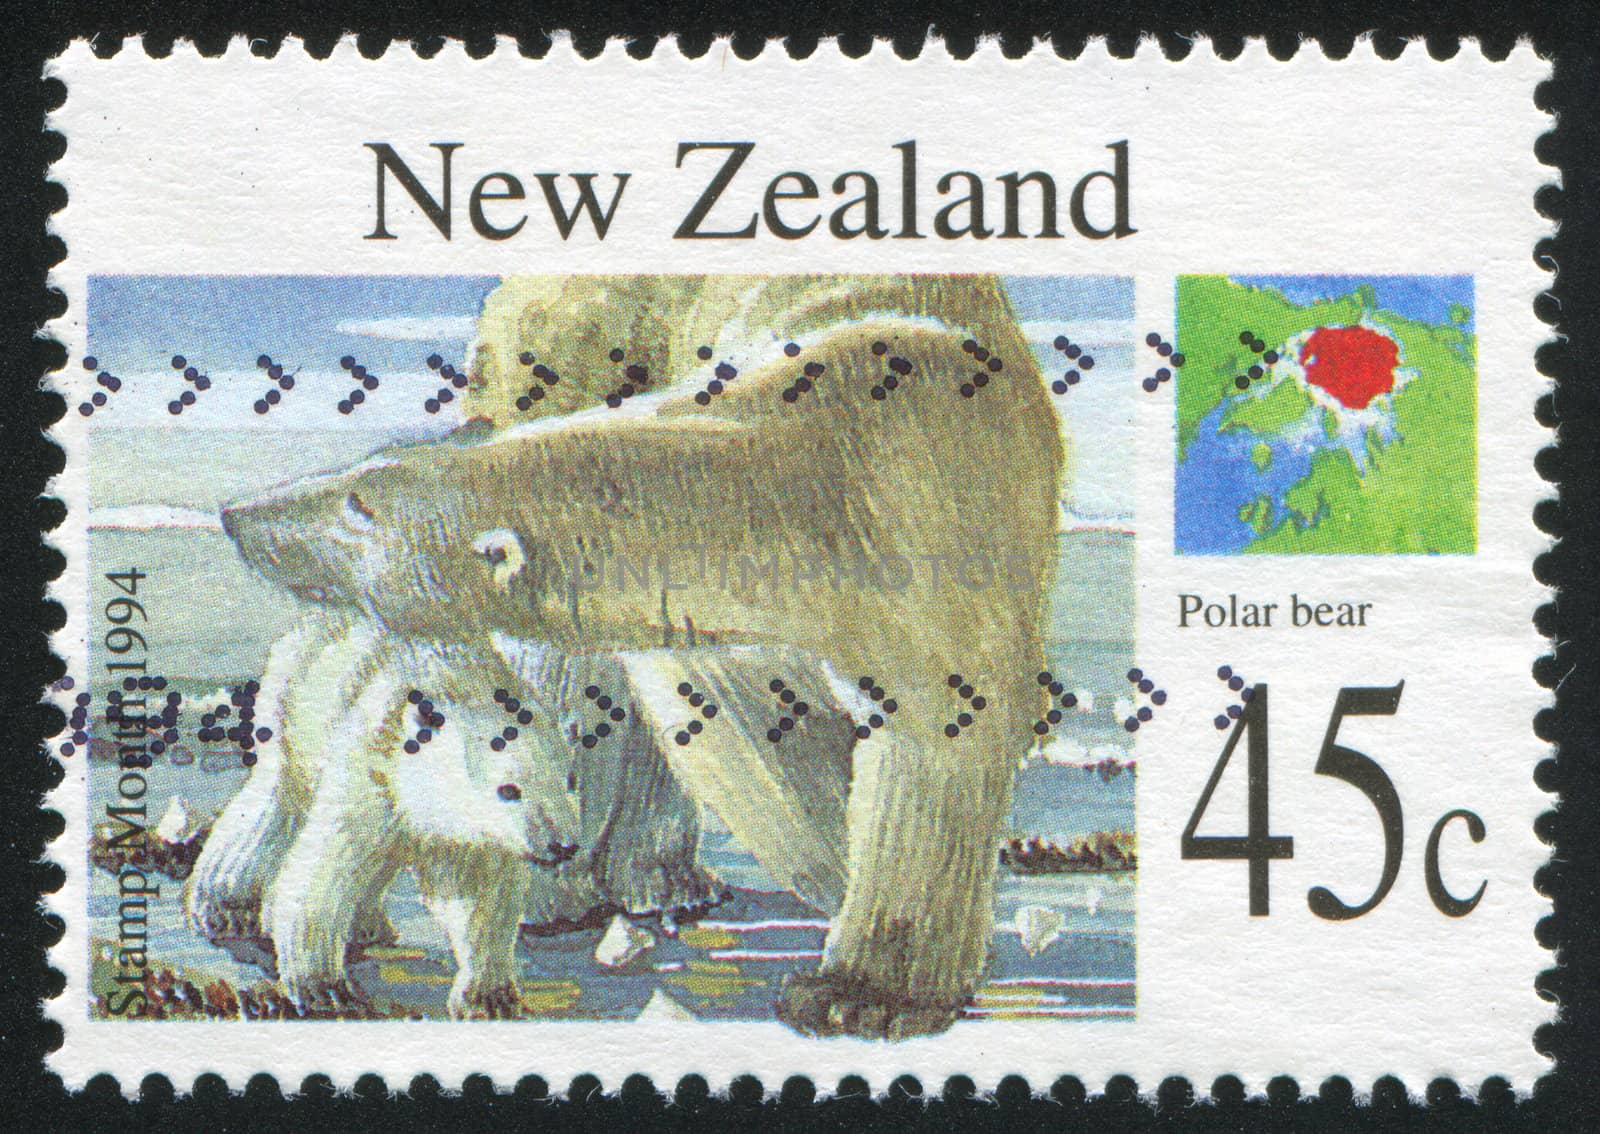 NEW ZEALAND - CIRCA 1994: stamp printed by New Zealand, shows Wild animals, Polar bear, circa 1994